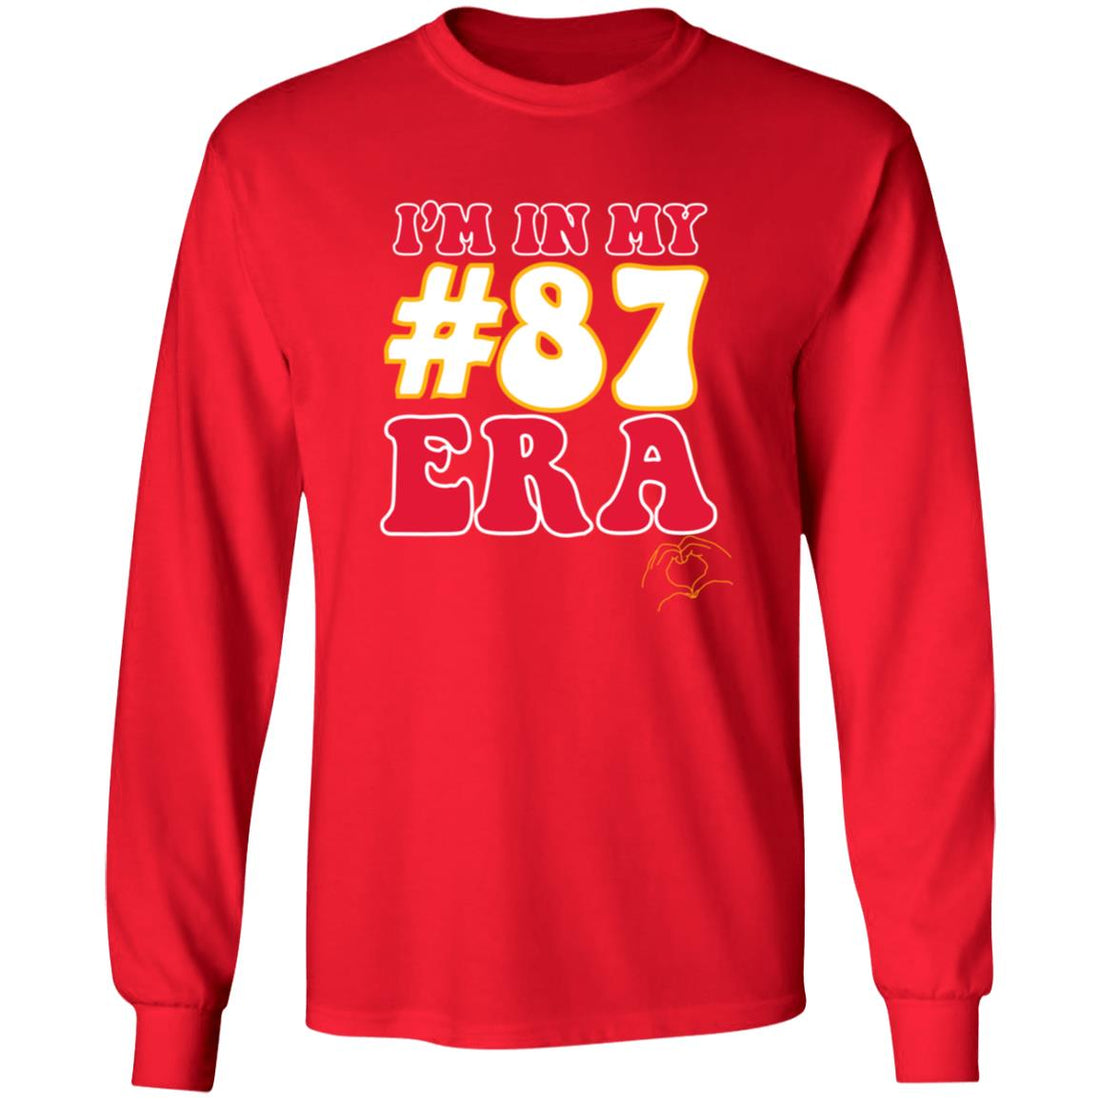 #87 ERA LS Ultra Cotton T-Shirt - T-Shirts - Positively Sassy - #87 ERA LS Ultra Cotton T-Shirt